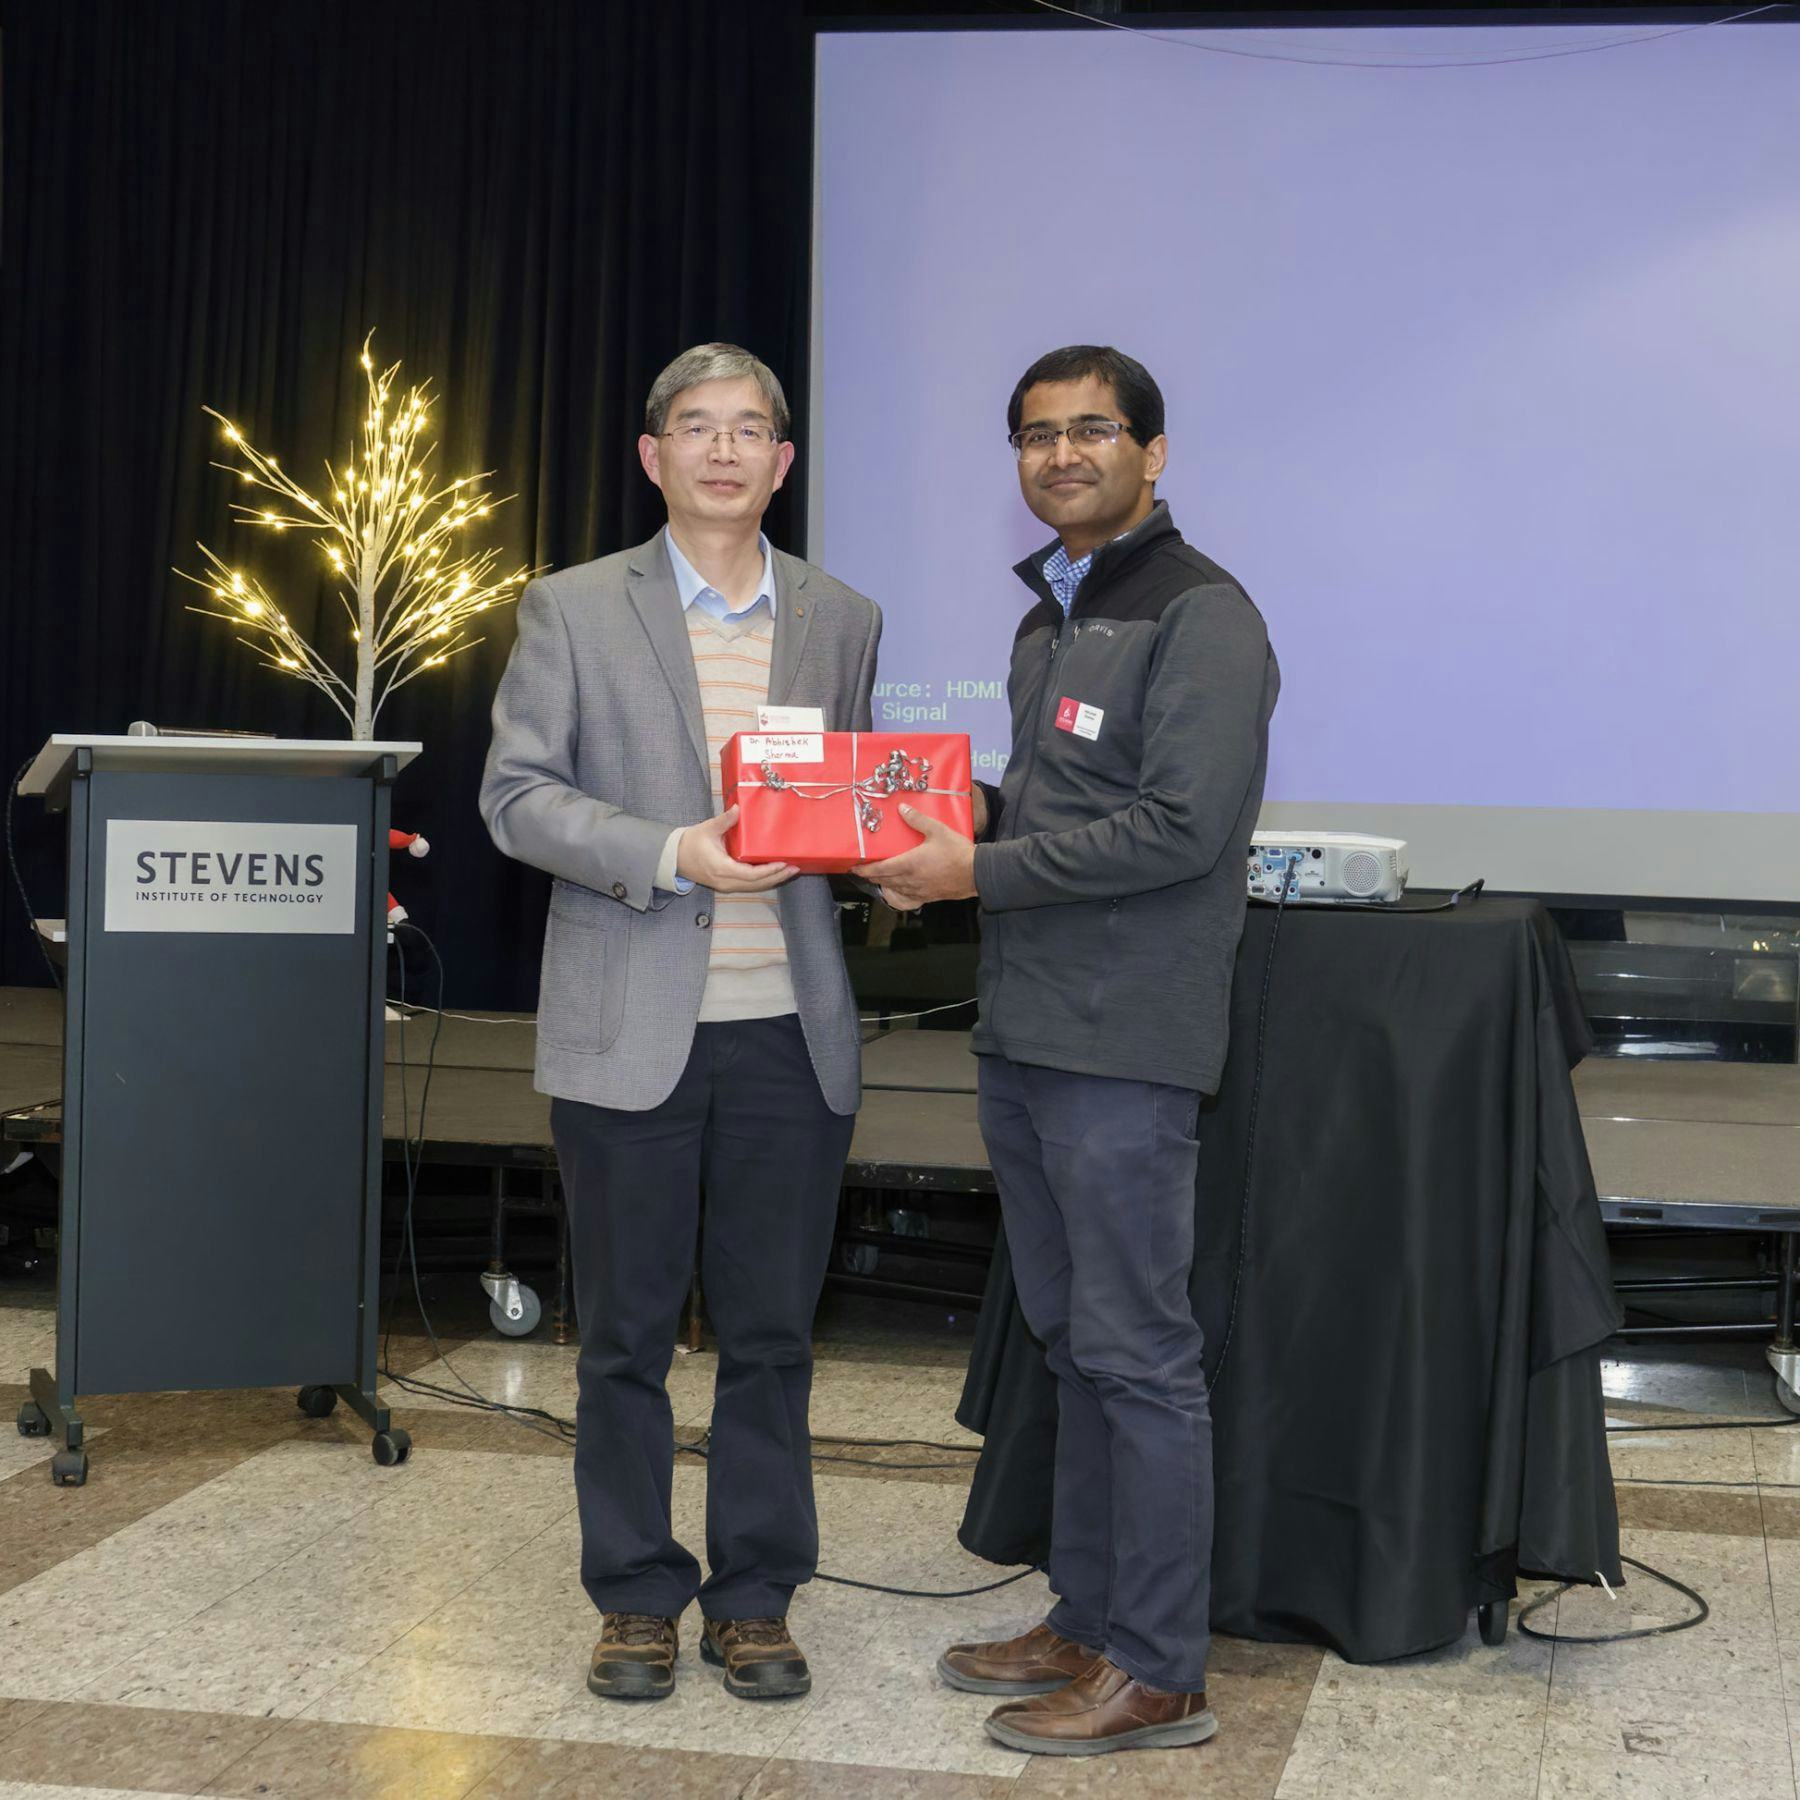 Yong Zhang and Abhishek Sharma standing together holding an award